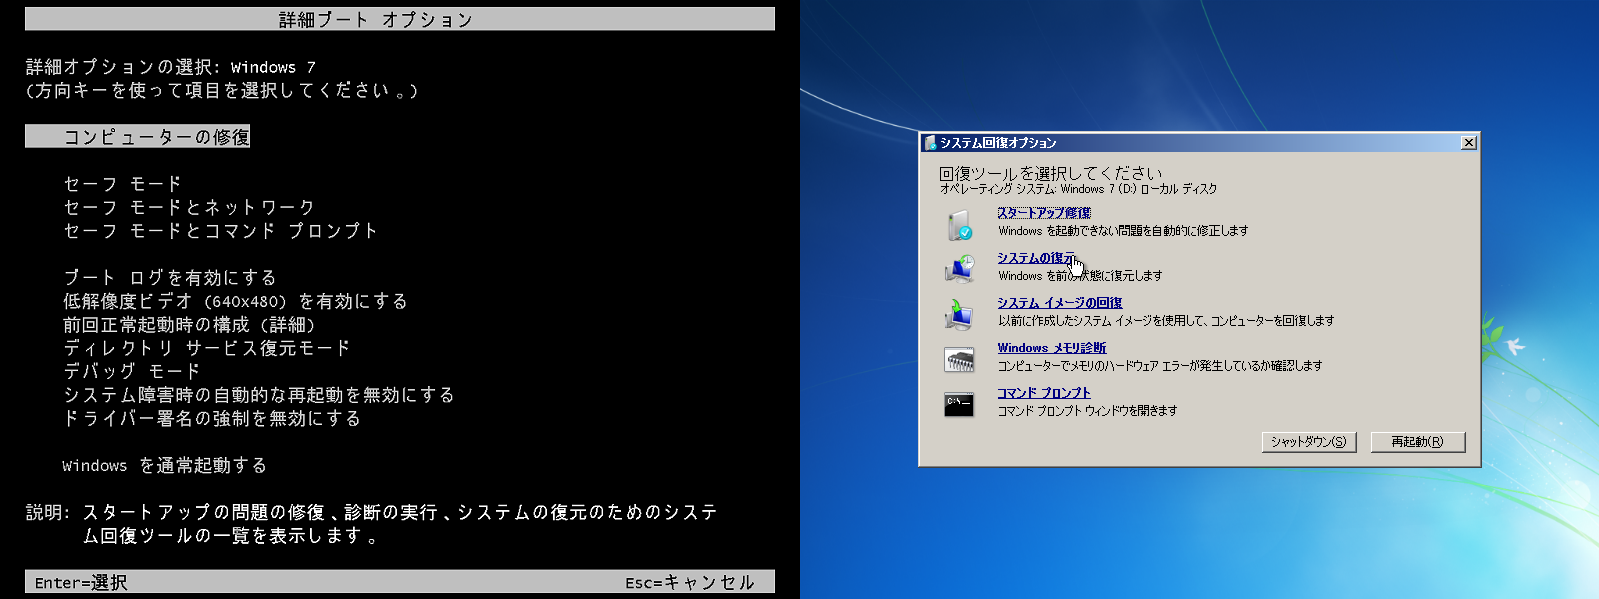 2@Windows VistaWindows 7AWindows ServerWinRENɂ́mF8nL[āuRs[^[̏CvIAuVXe̕vs